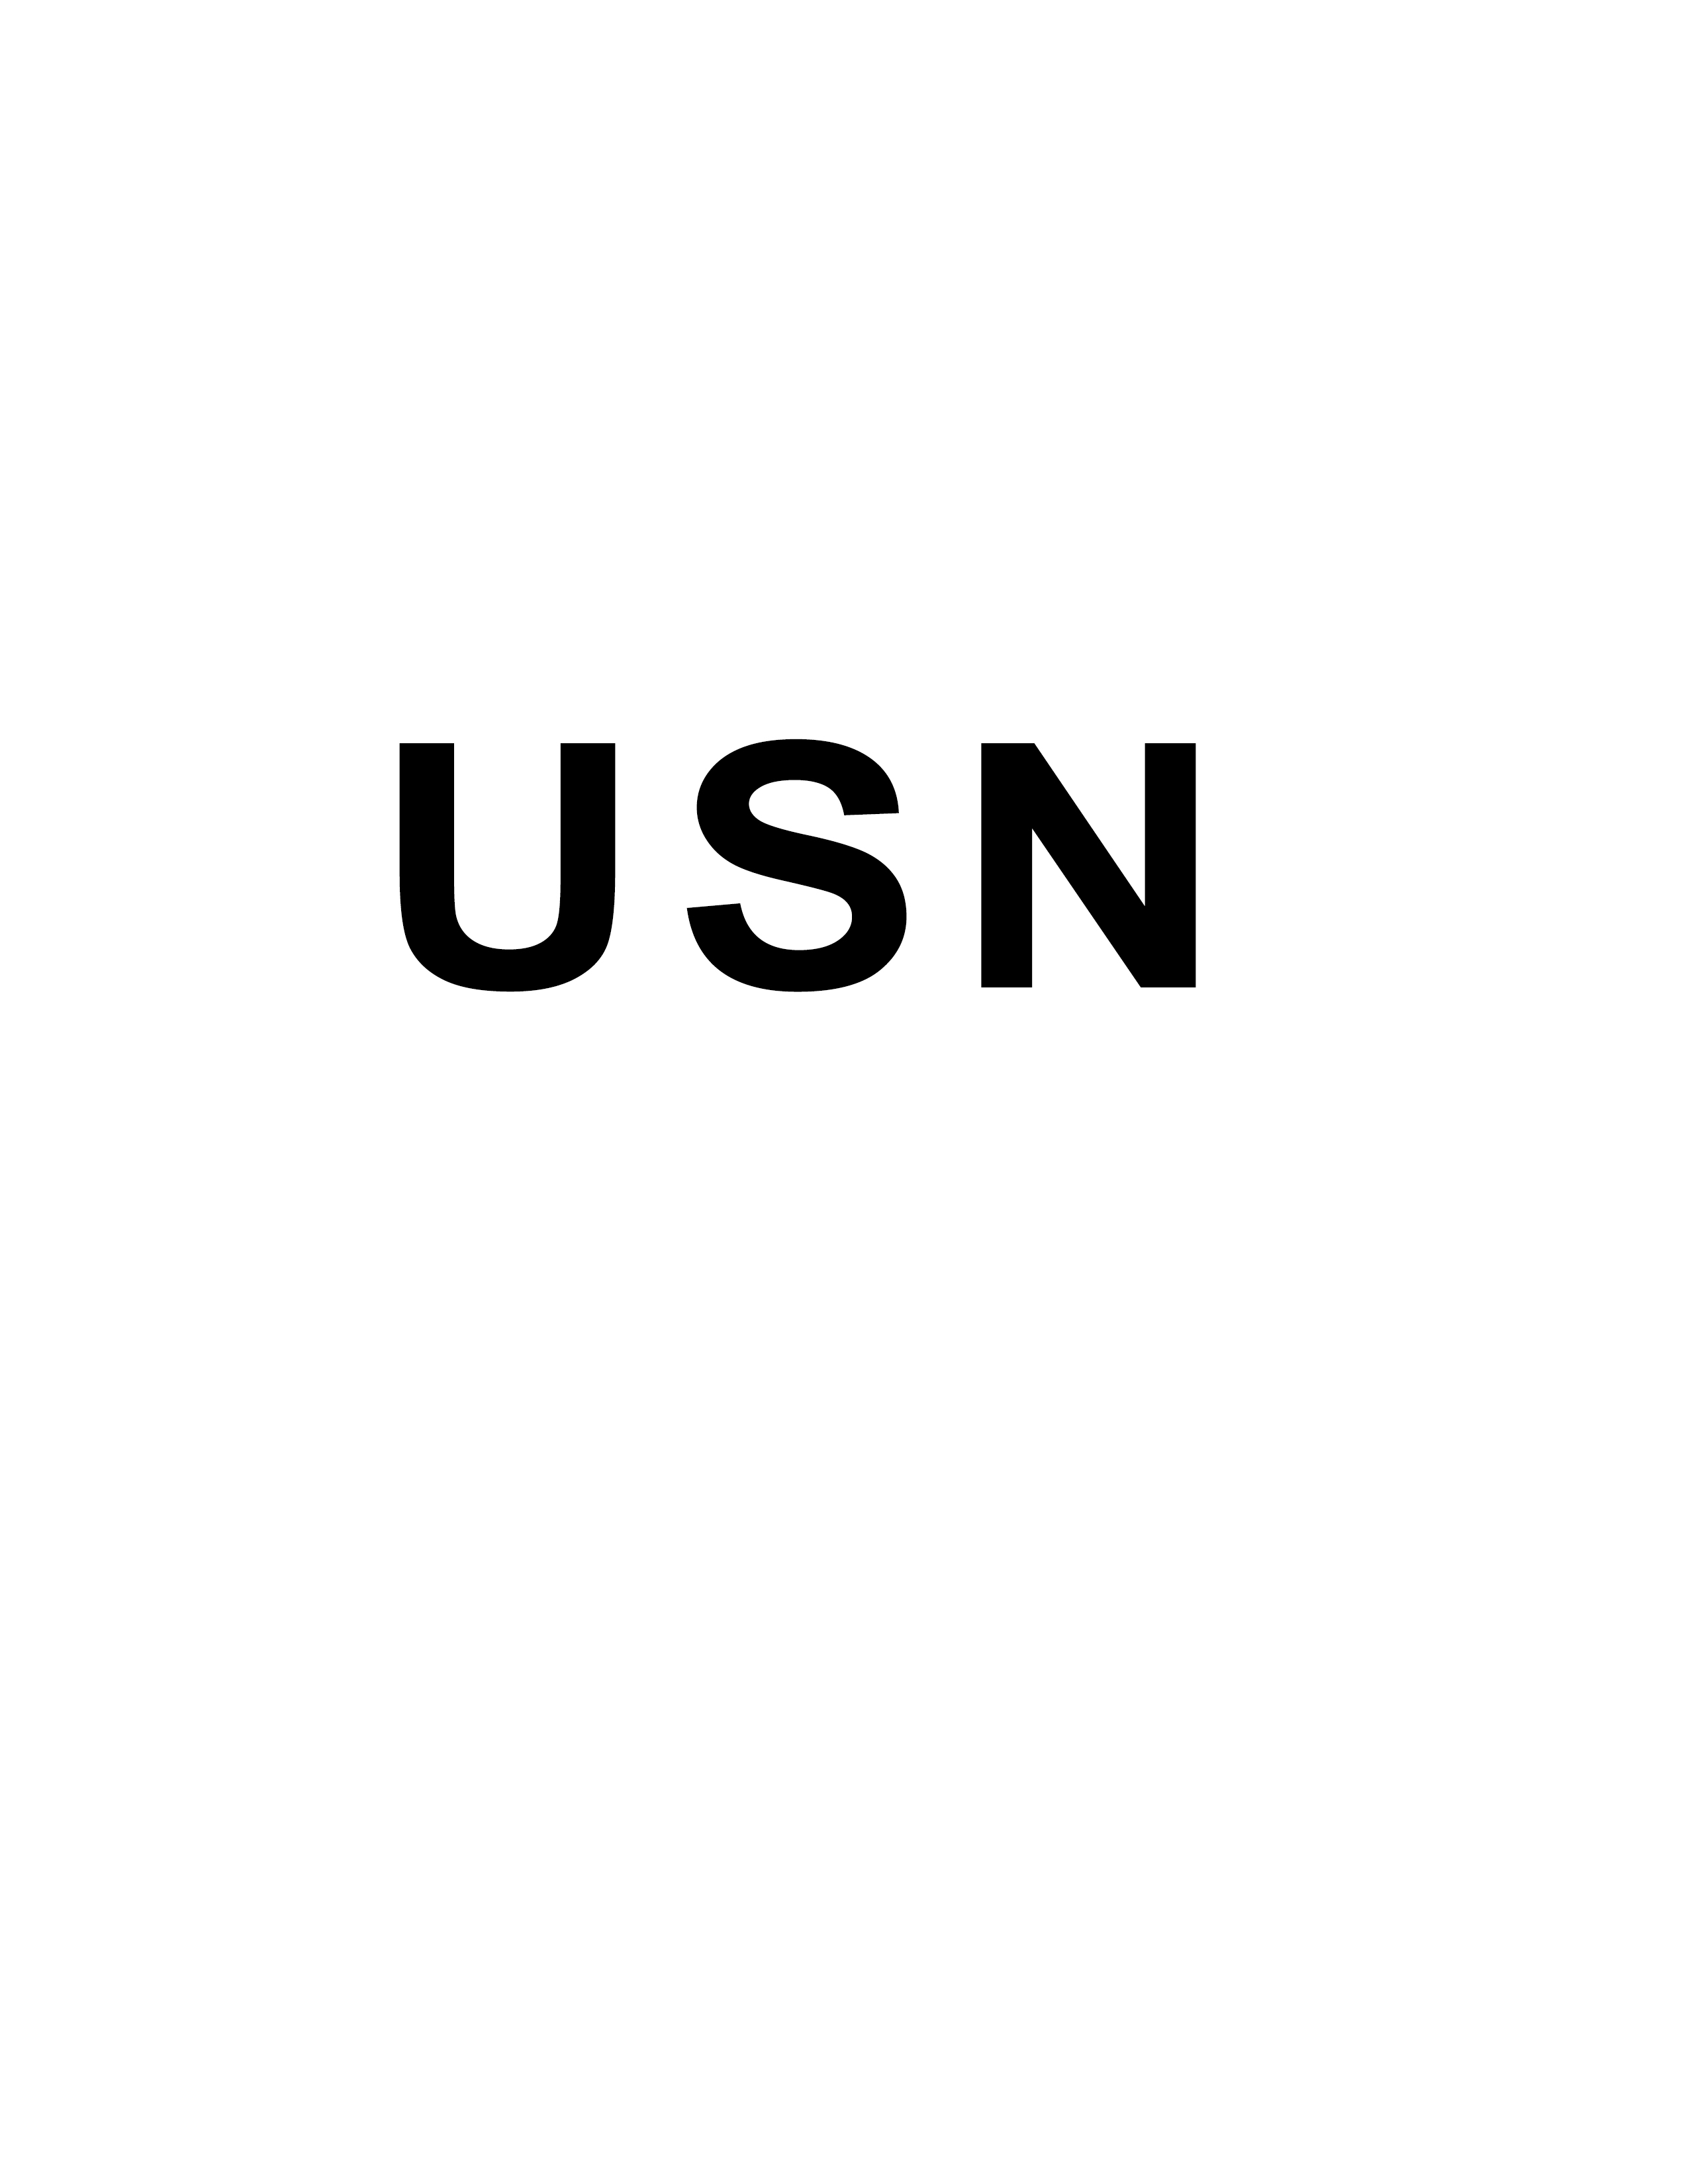 USN Stencil 5.jpg